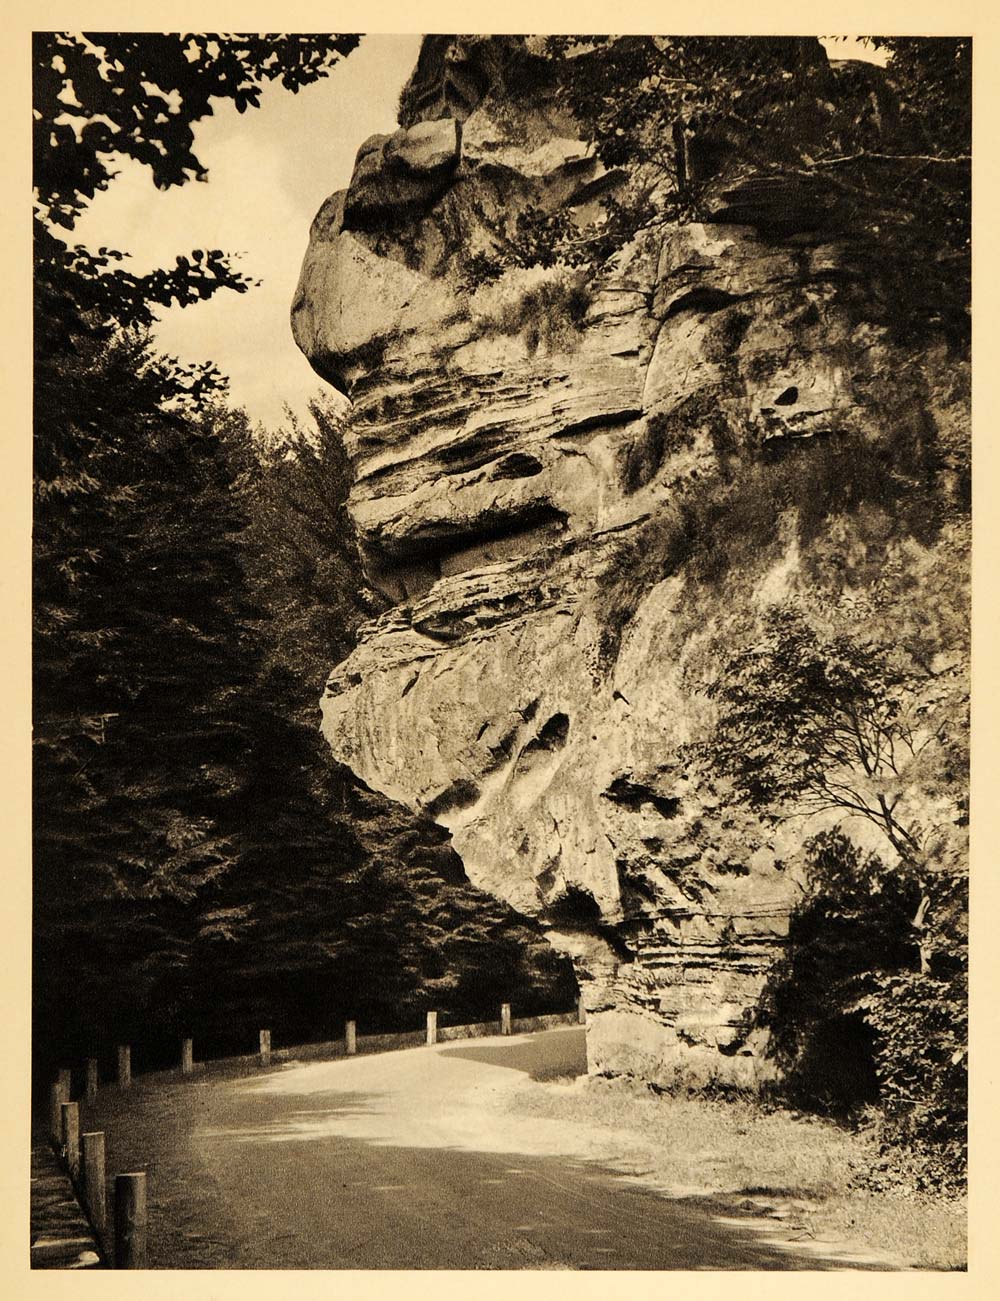 1932 Road Berdorf Mullertal Luxembourg Sandstone Rock - ORIGINAL LUX2